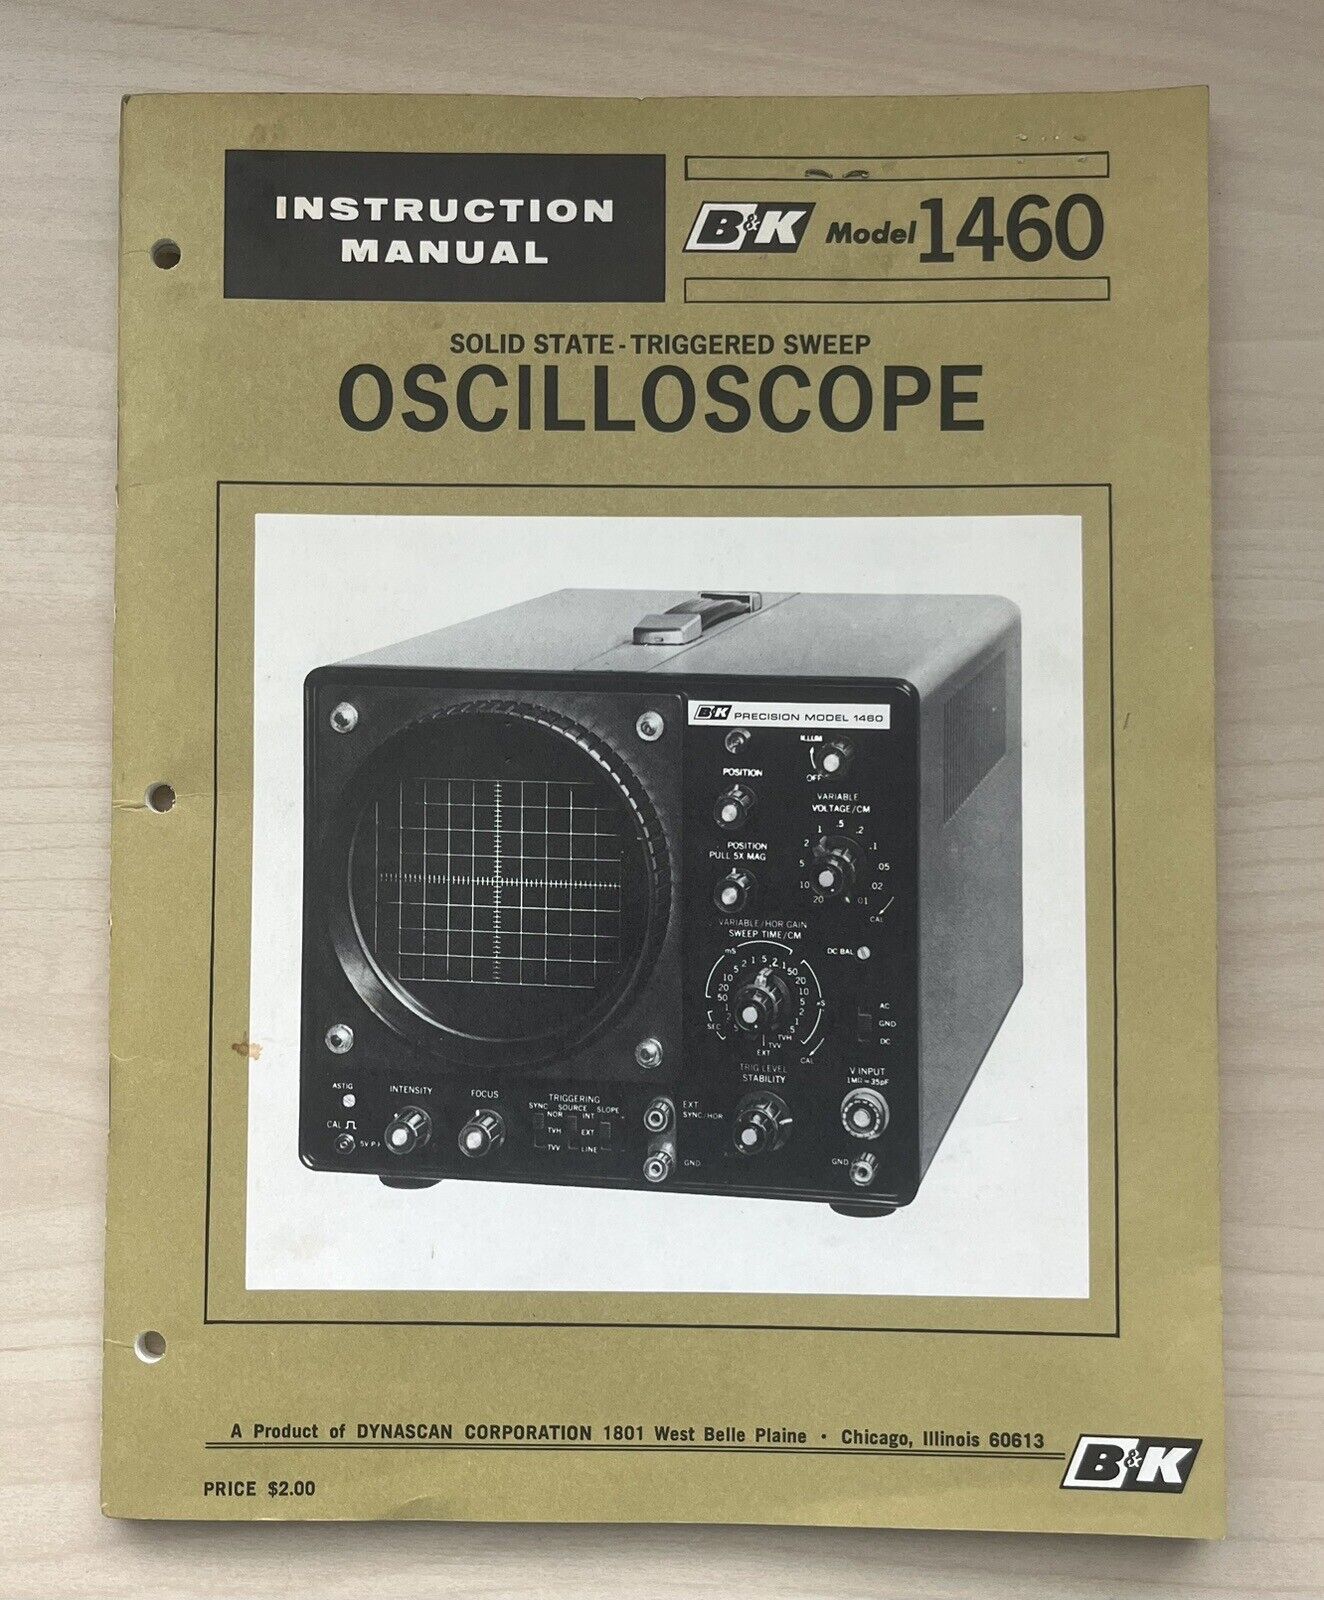 B&K Triggered Sweep Dual Trace Oscilloscope Instruction Manual Model 1470